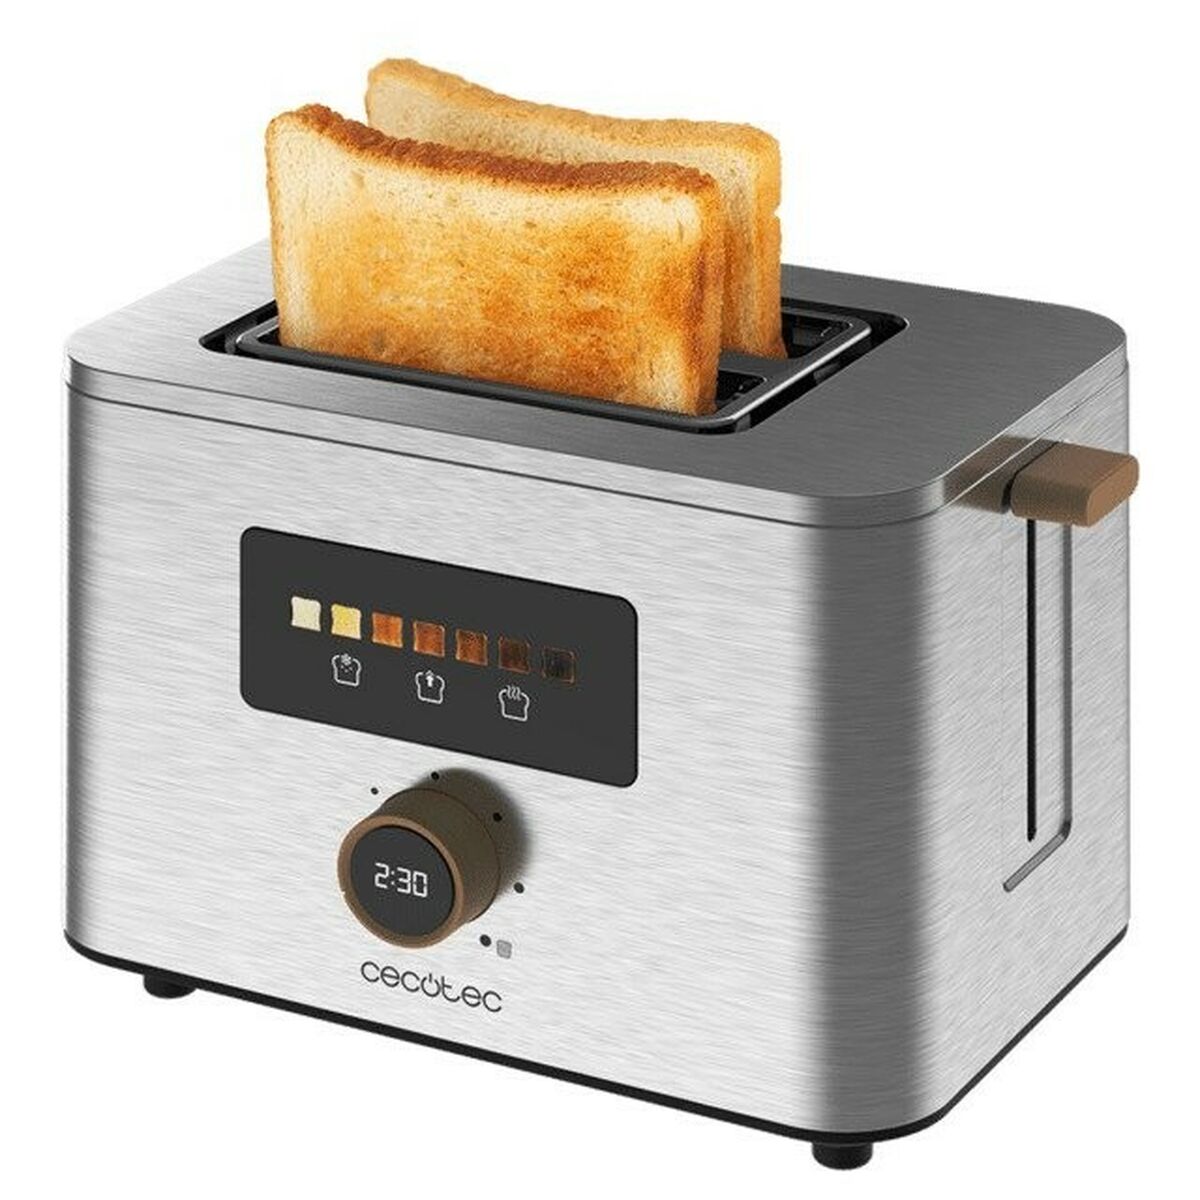 Kaufe Toaster Cecotec Touch&Toast Double 950 W bei AWK Flagship um € 68.00